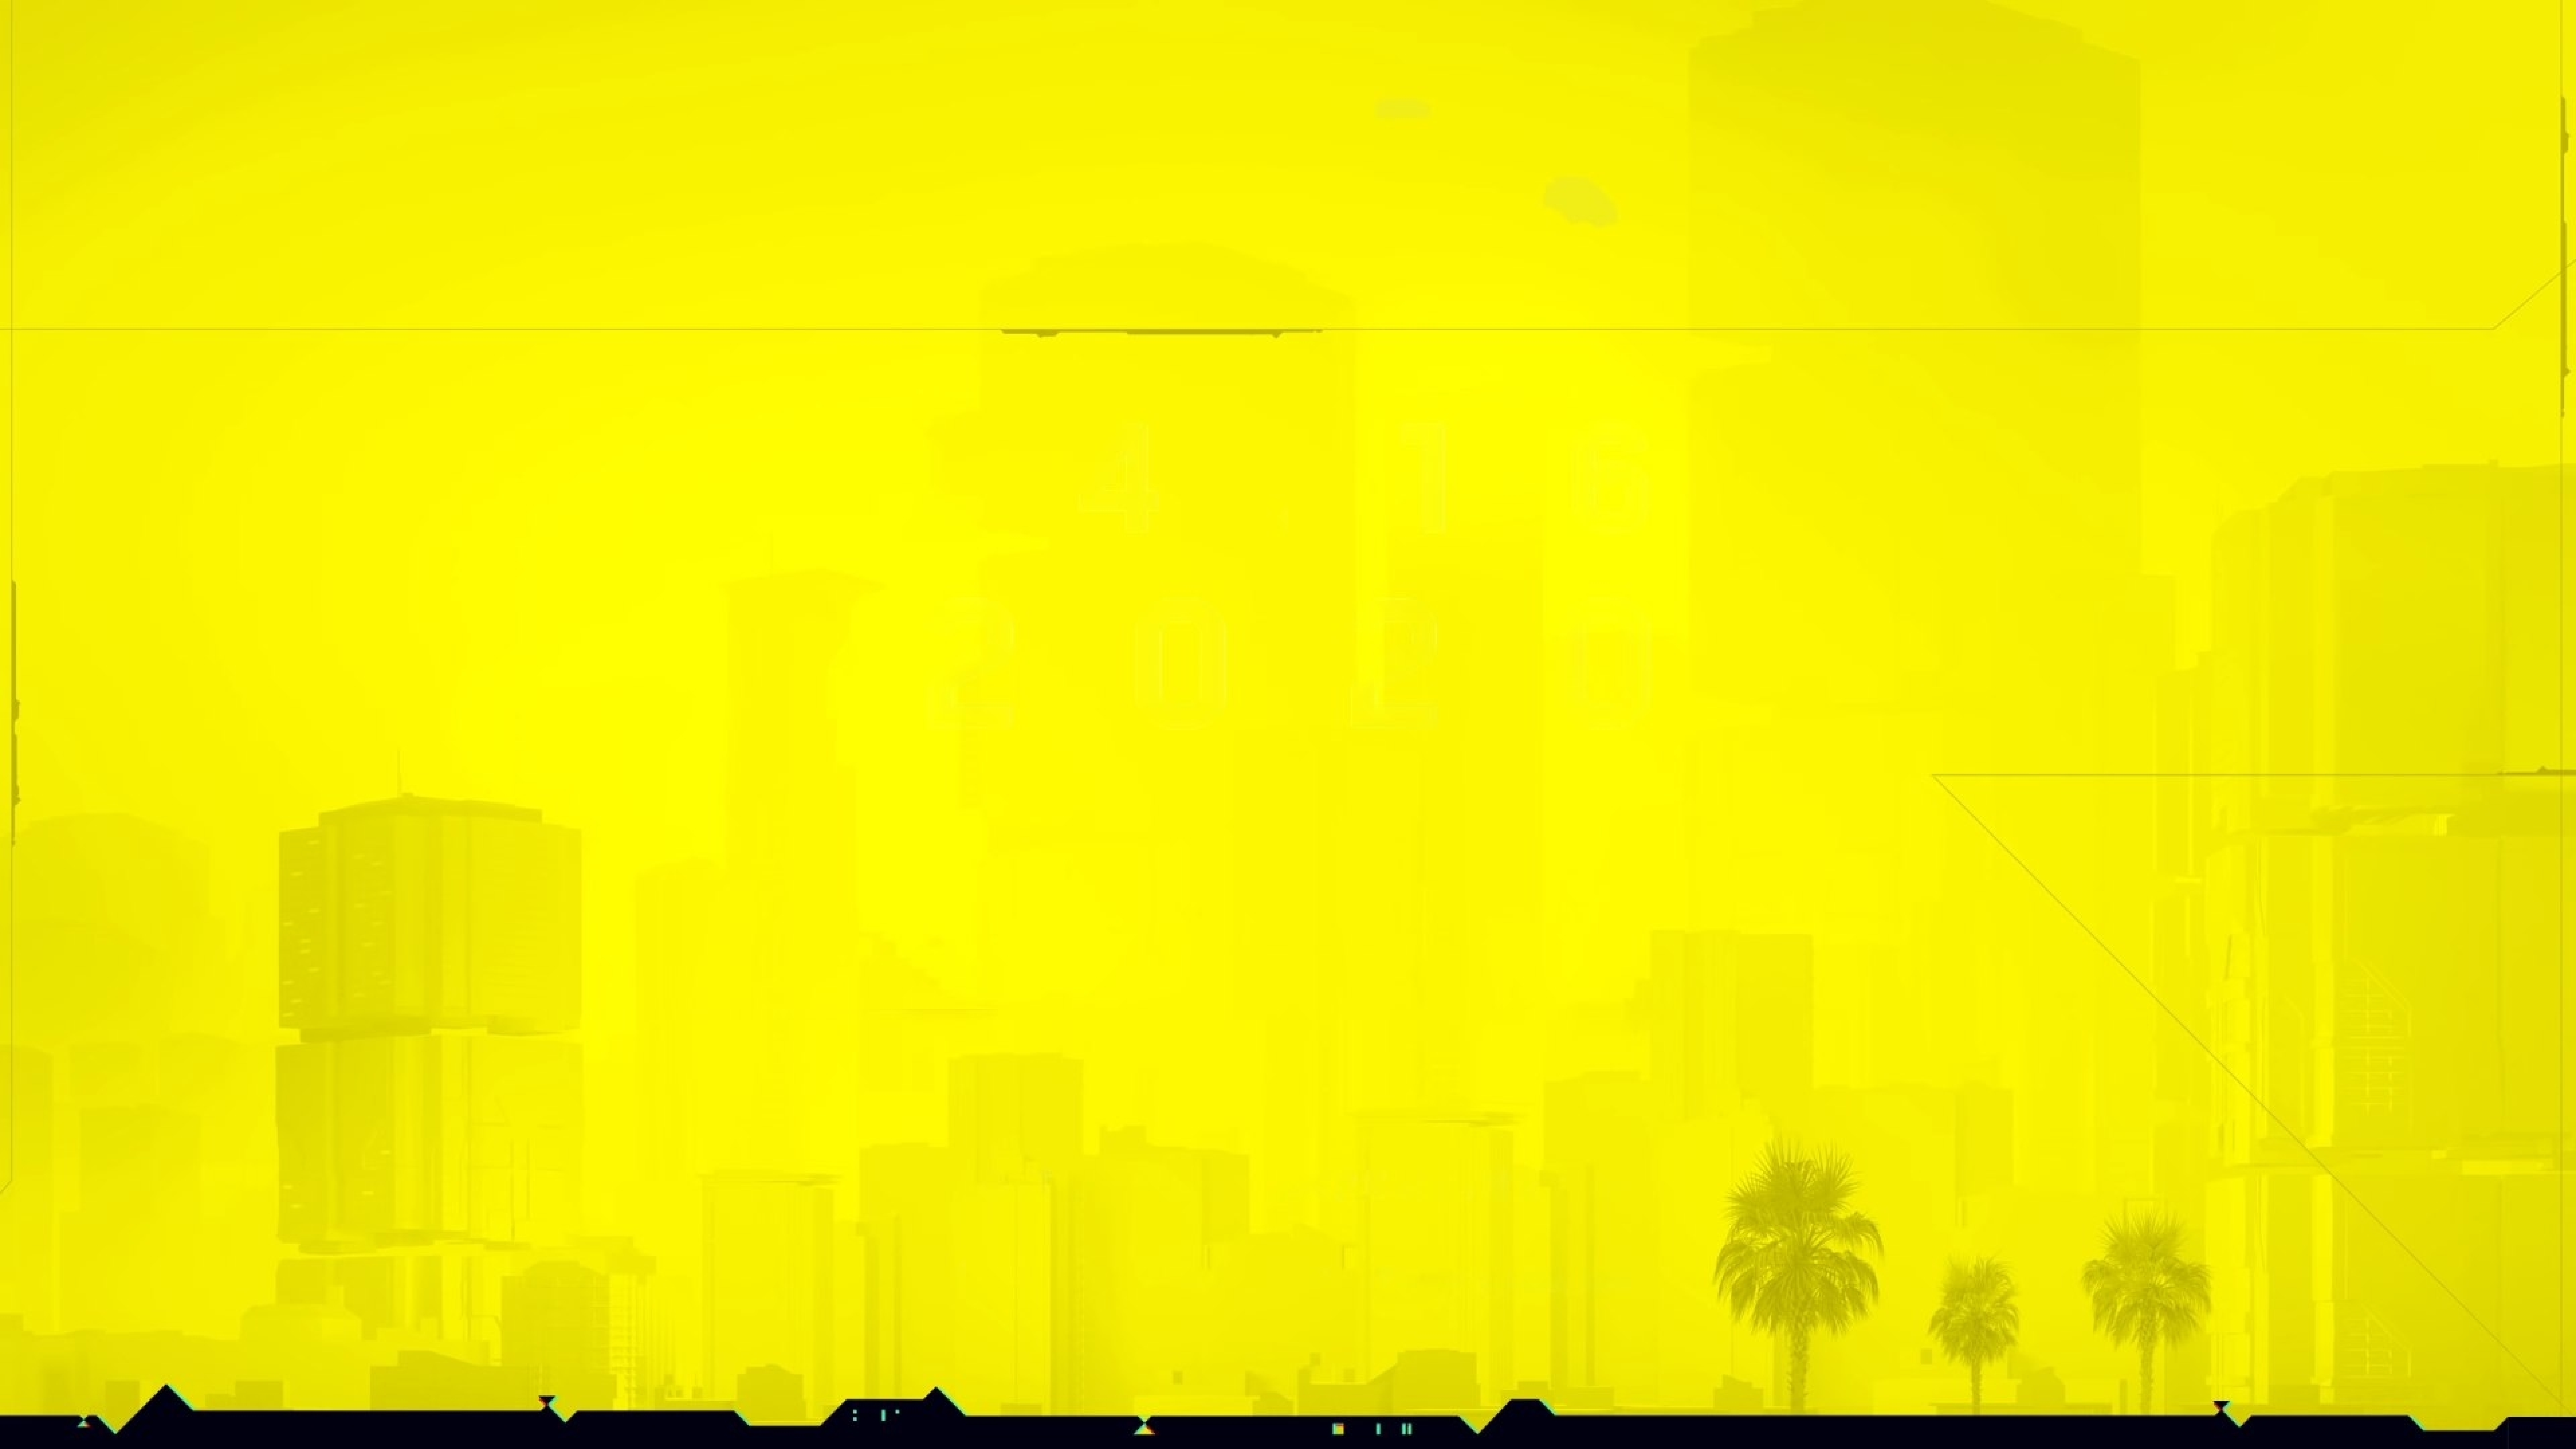 7680x4320 Cyberpunk 2077 Yellow Background 8K Wallpaper, HD Hi-Tech 4K  Wallpapers, Images, Photos and Background - Wallpapers Den